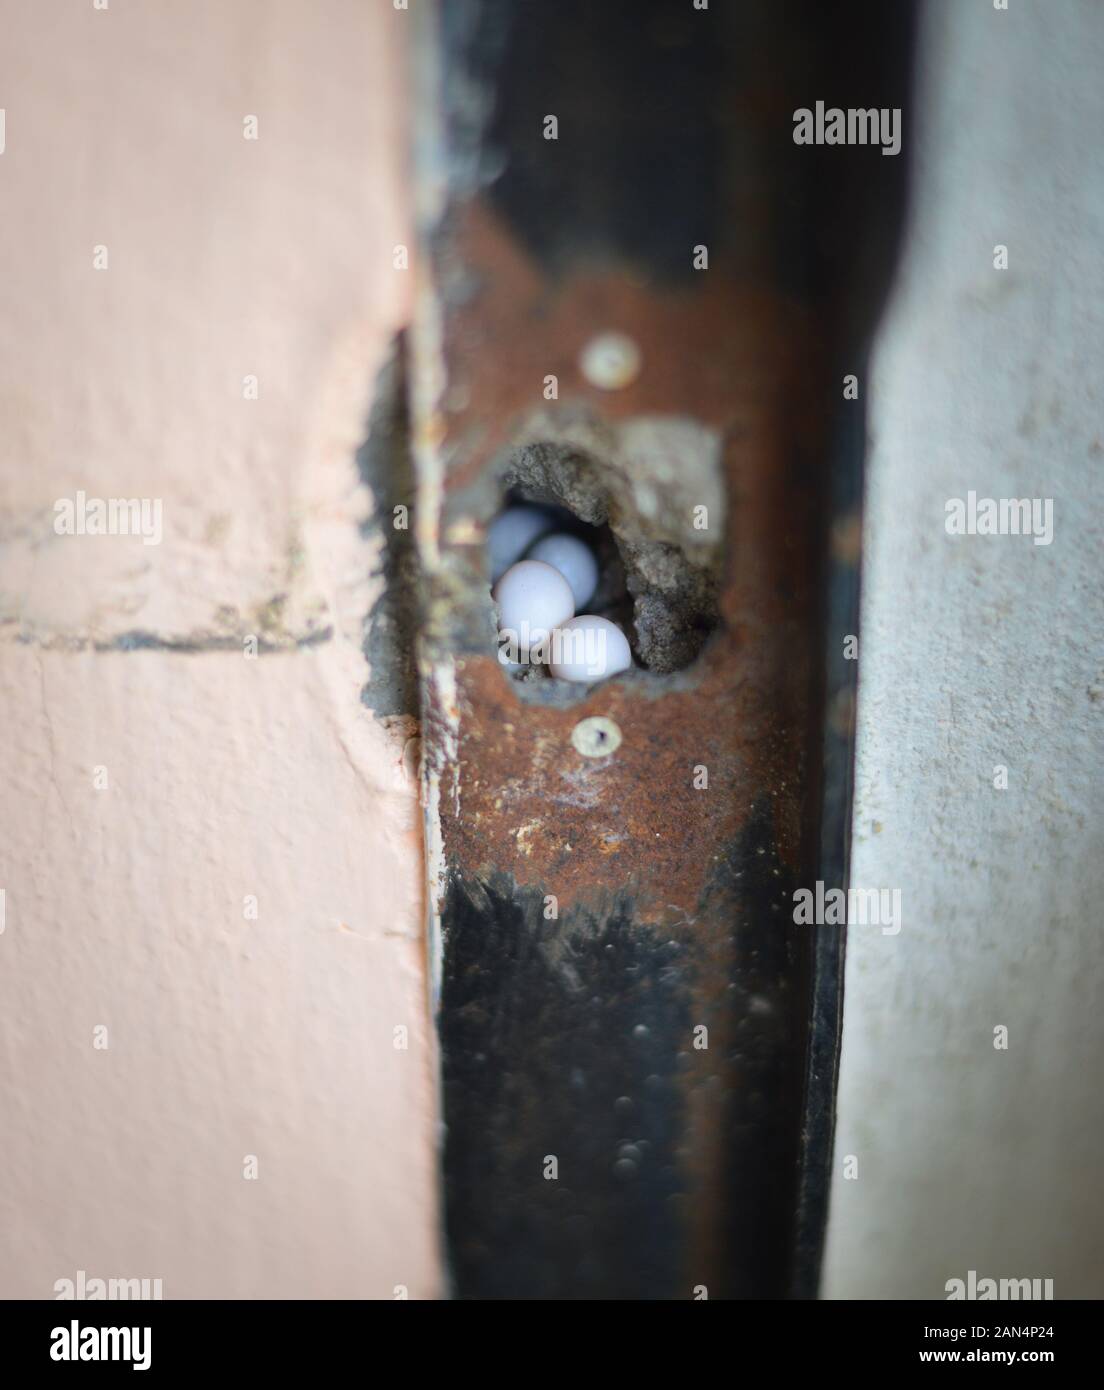 Common house gecko eggs deposited in a hole of a door frame. Merida, Yucatan, Mexico. Stock Photo